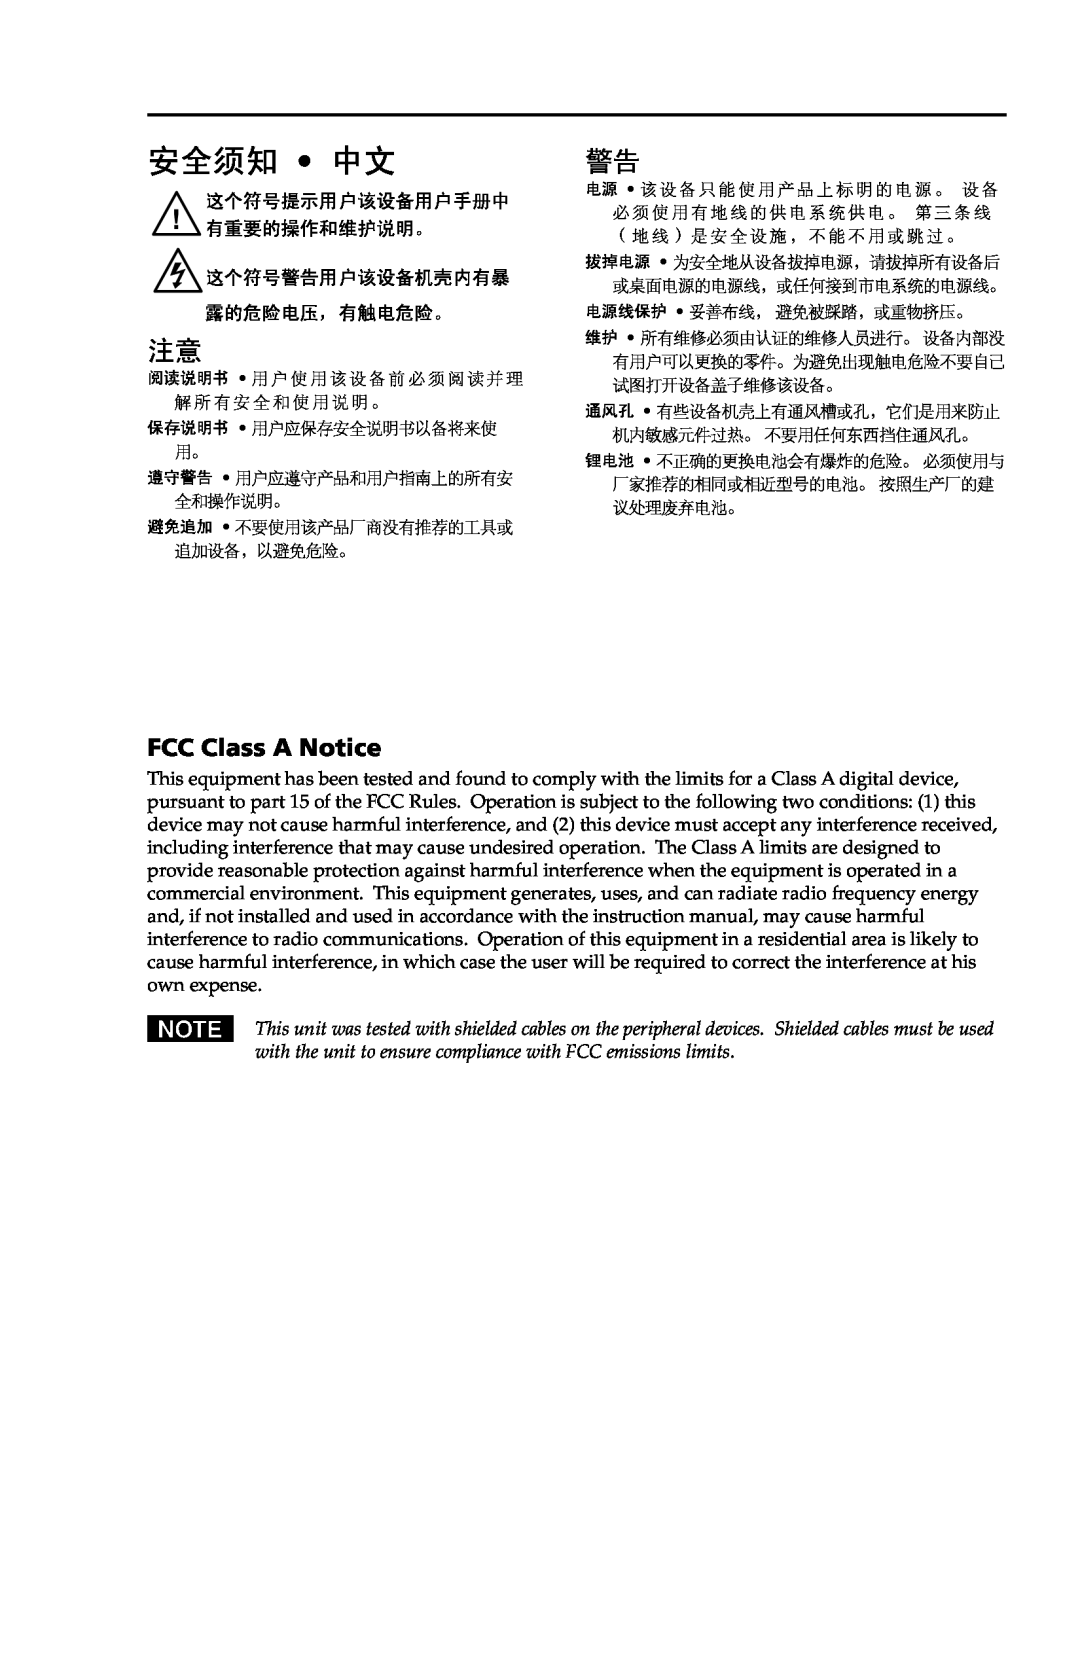 Extron electronic HDMI 201 Rx user manual 安全须知 中文 